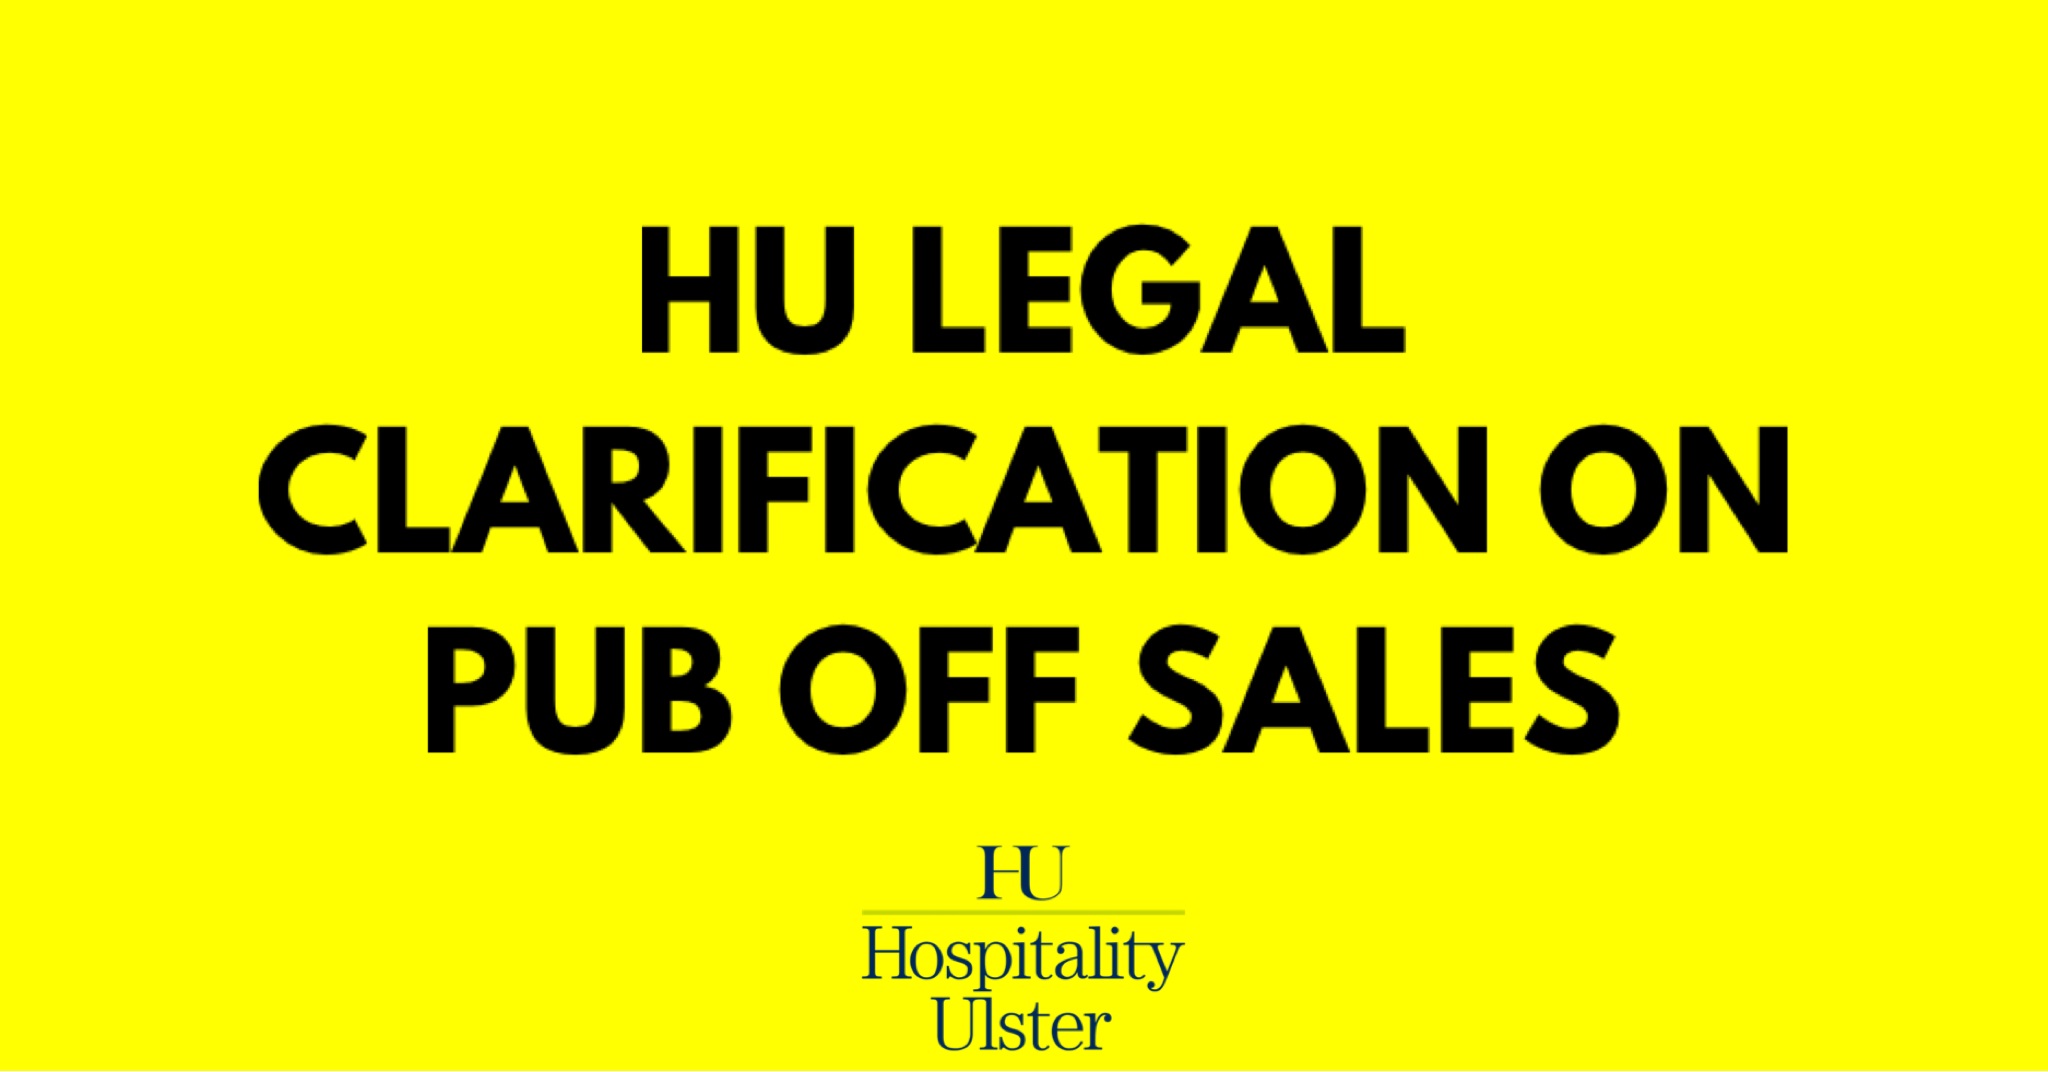 HU LEGAL CLARIFICATION ON PUB OFF SALES